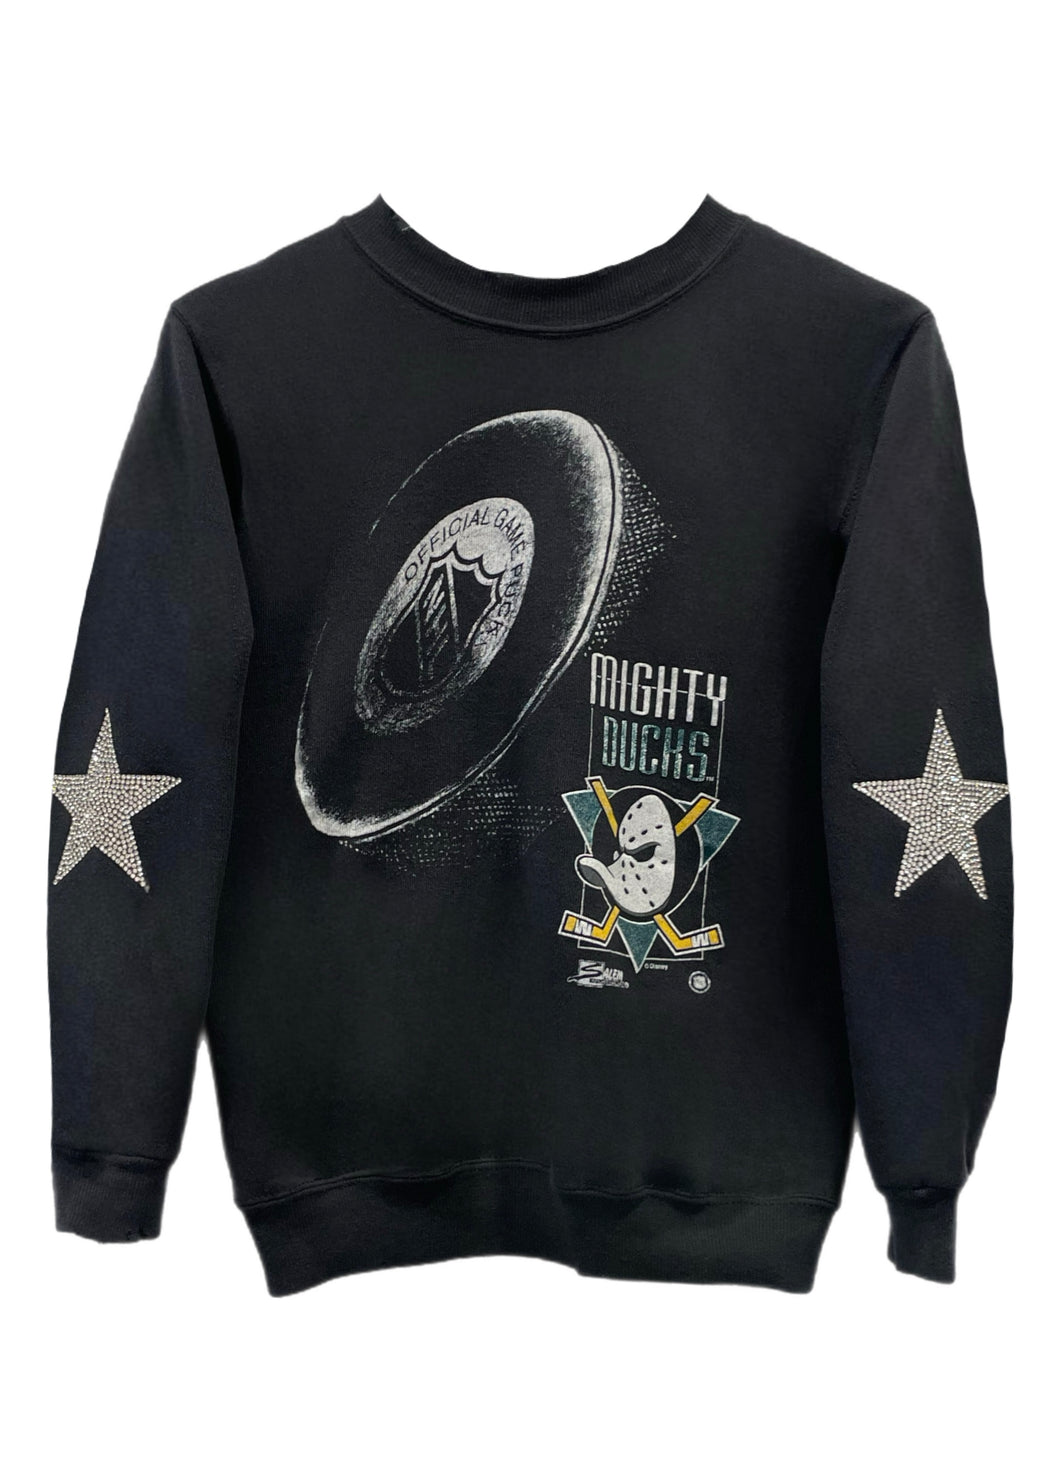 Anaheim Ducks, NHL One of a KIND Vintage “Mighty Ducks” Sweatshirt with Crystal Star Design - Size: Kids M/L